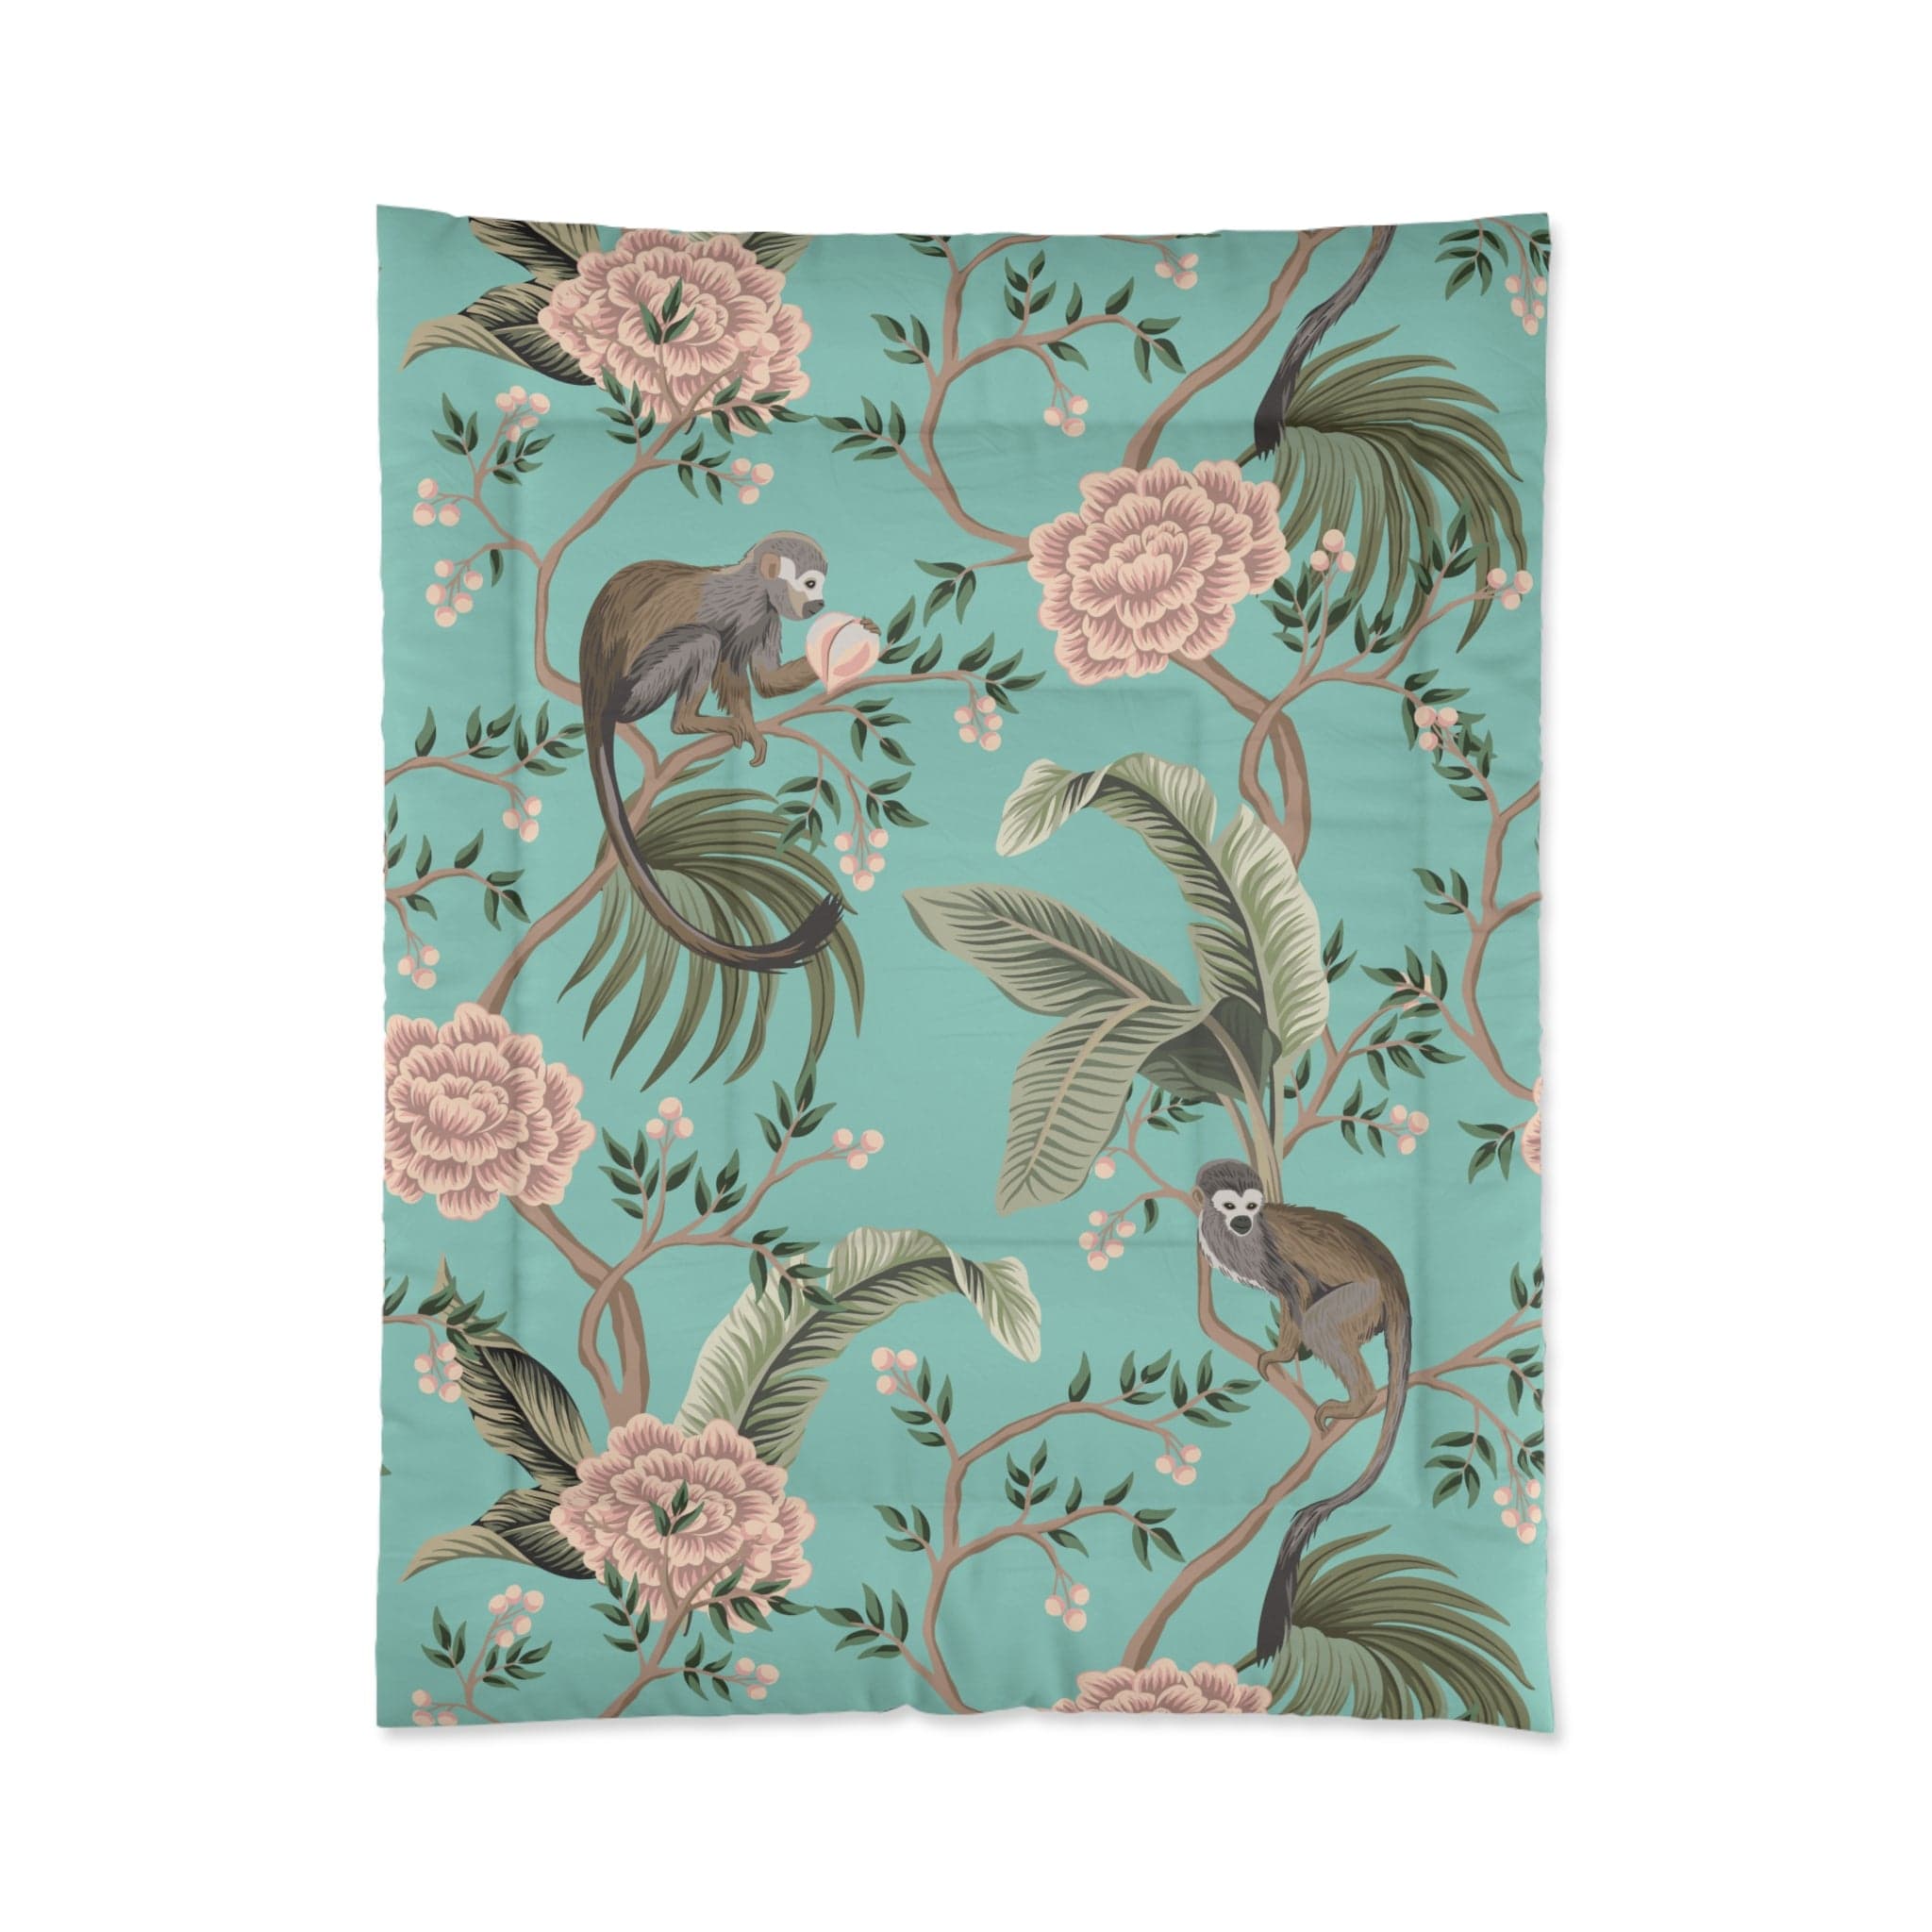 Kate McEnroe New York Chinoiserie Monkey Floral Comforter, Teal Pink Botanical Bedding Comforters